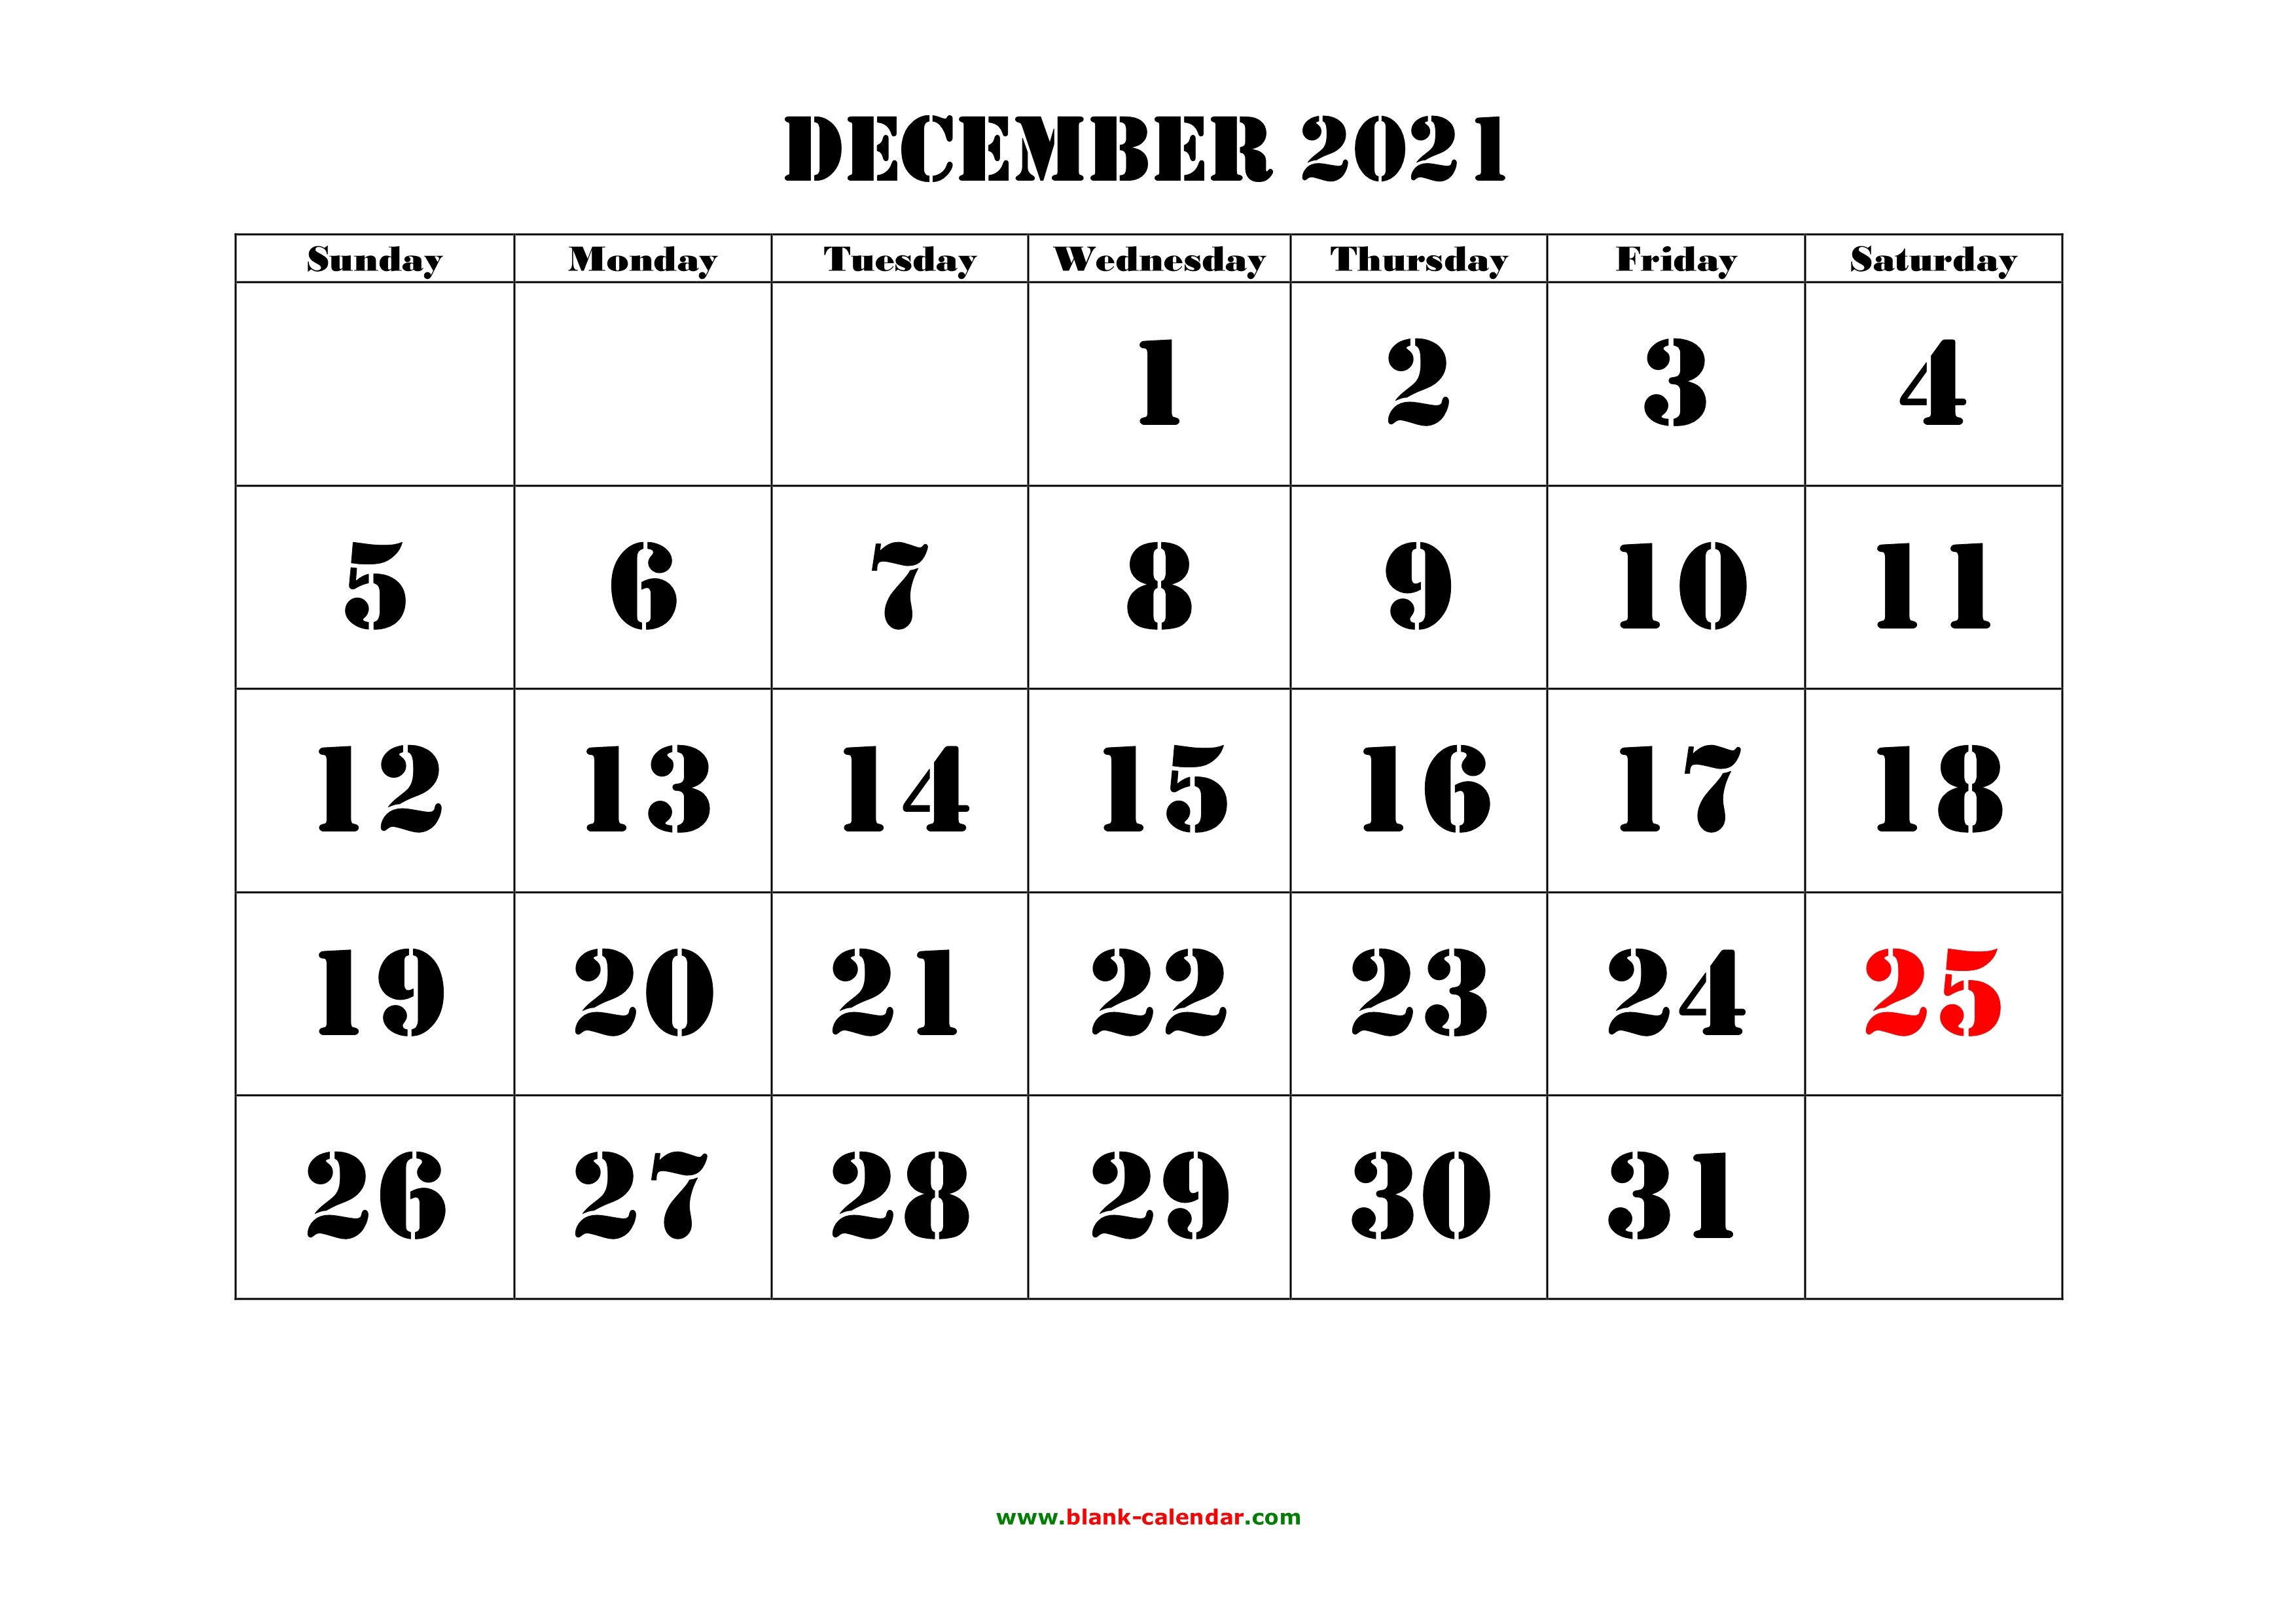 december 2021 holiday calendar Free Download Printable December 2021 Calendar Large Font Design Holidays On Red december 2021 holiday calendar